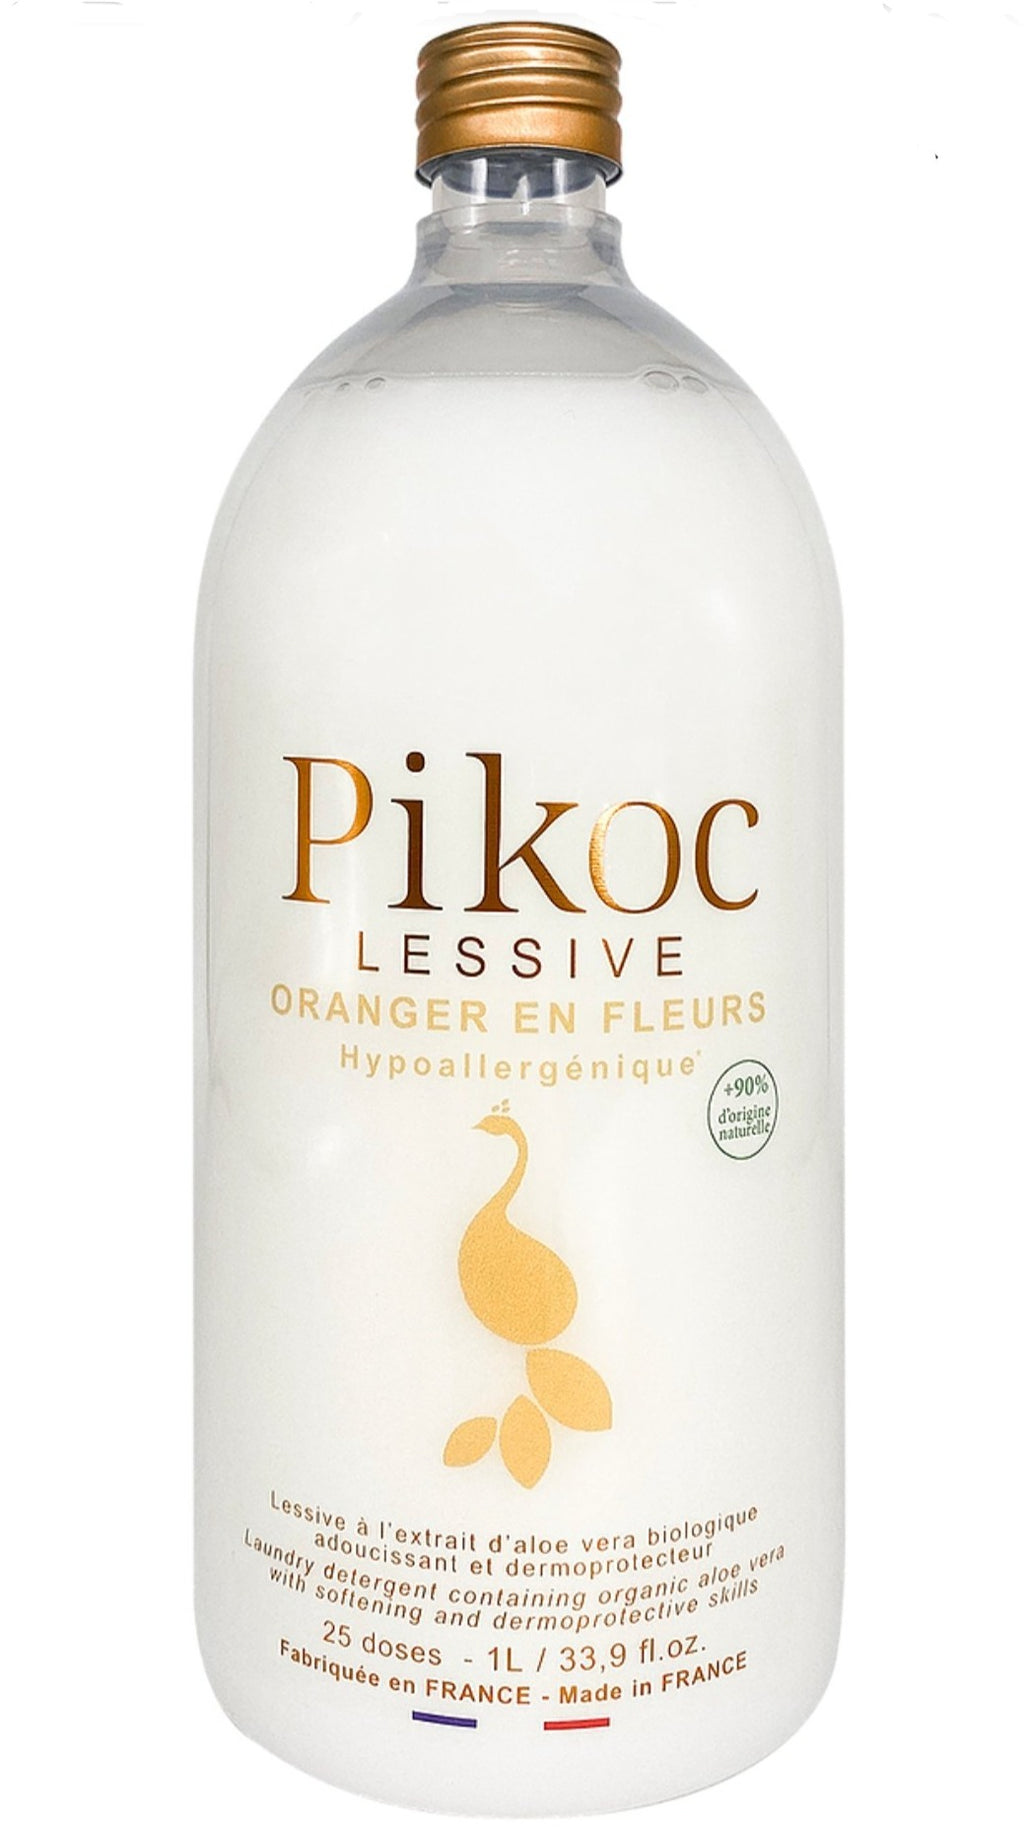 Pikoc Laundry Detergent - Oranger en Fleurs (Orange Blossom)